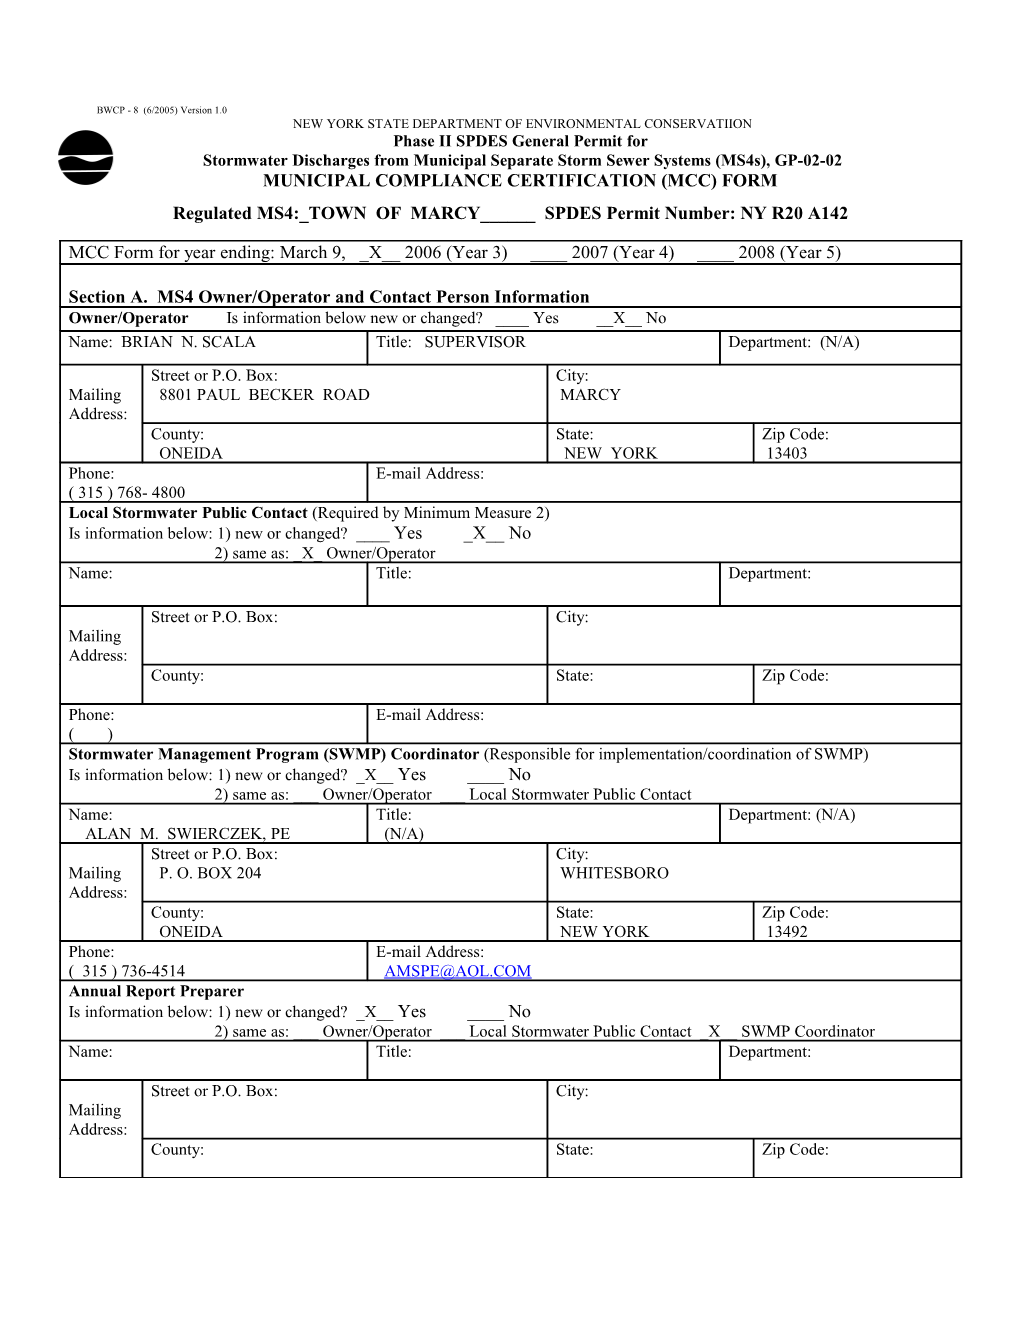 GP-02-02 Municipal Compliance Certification Form Page7